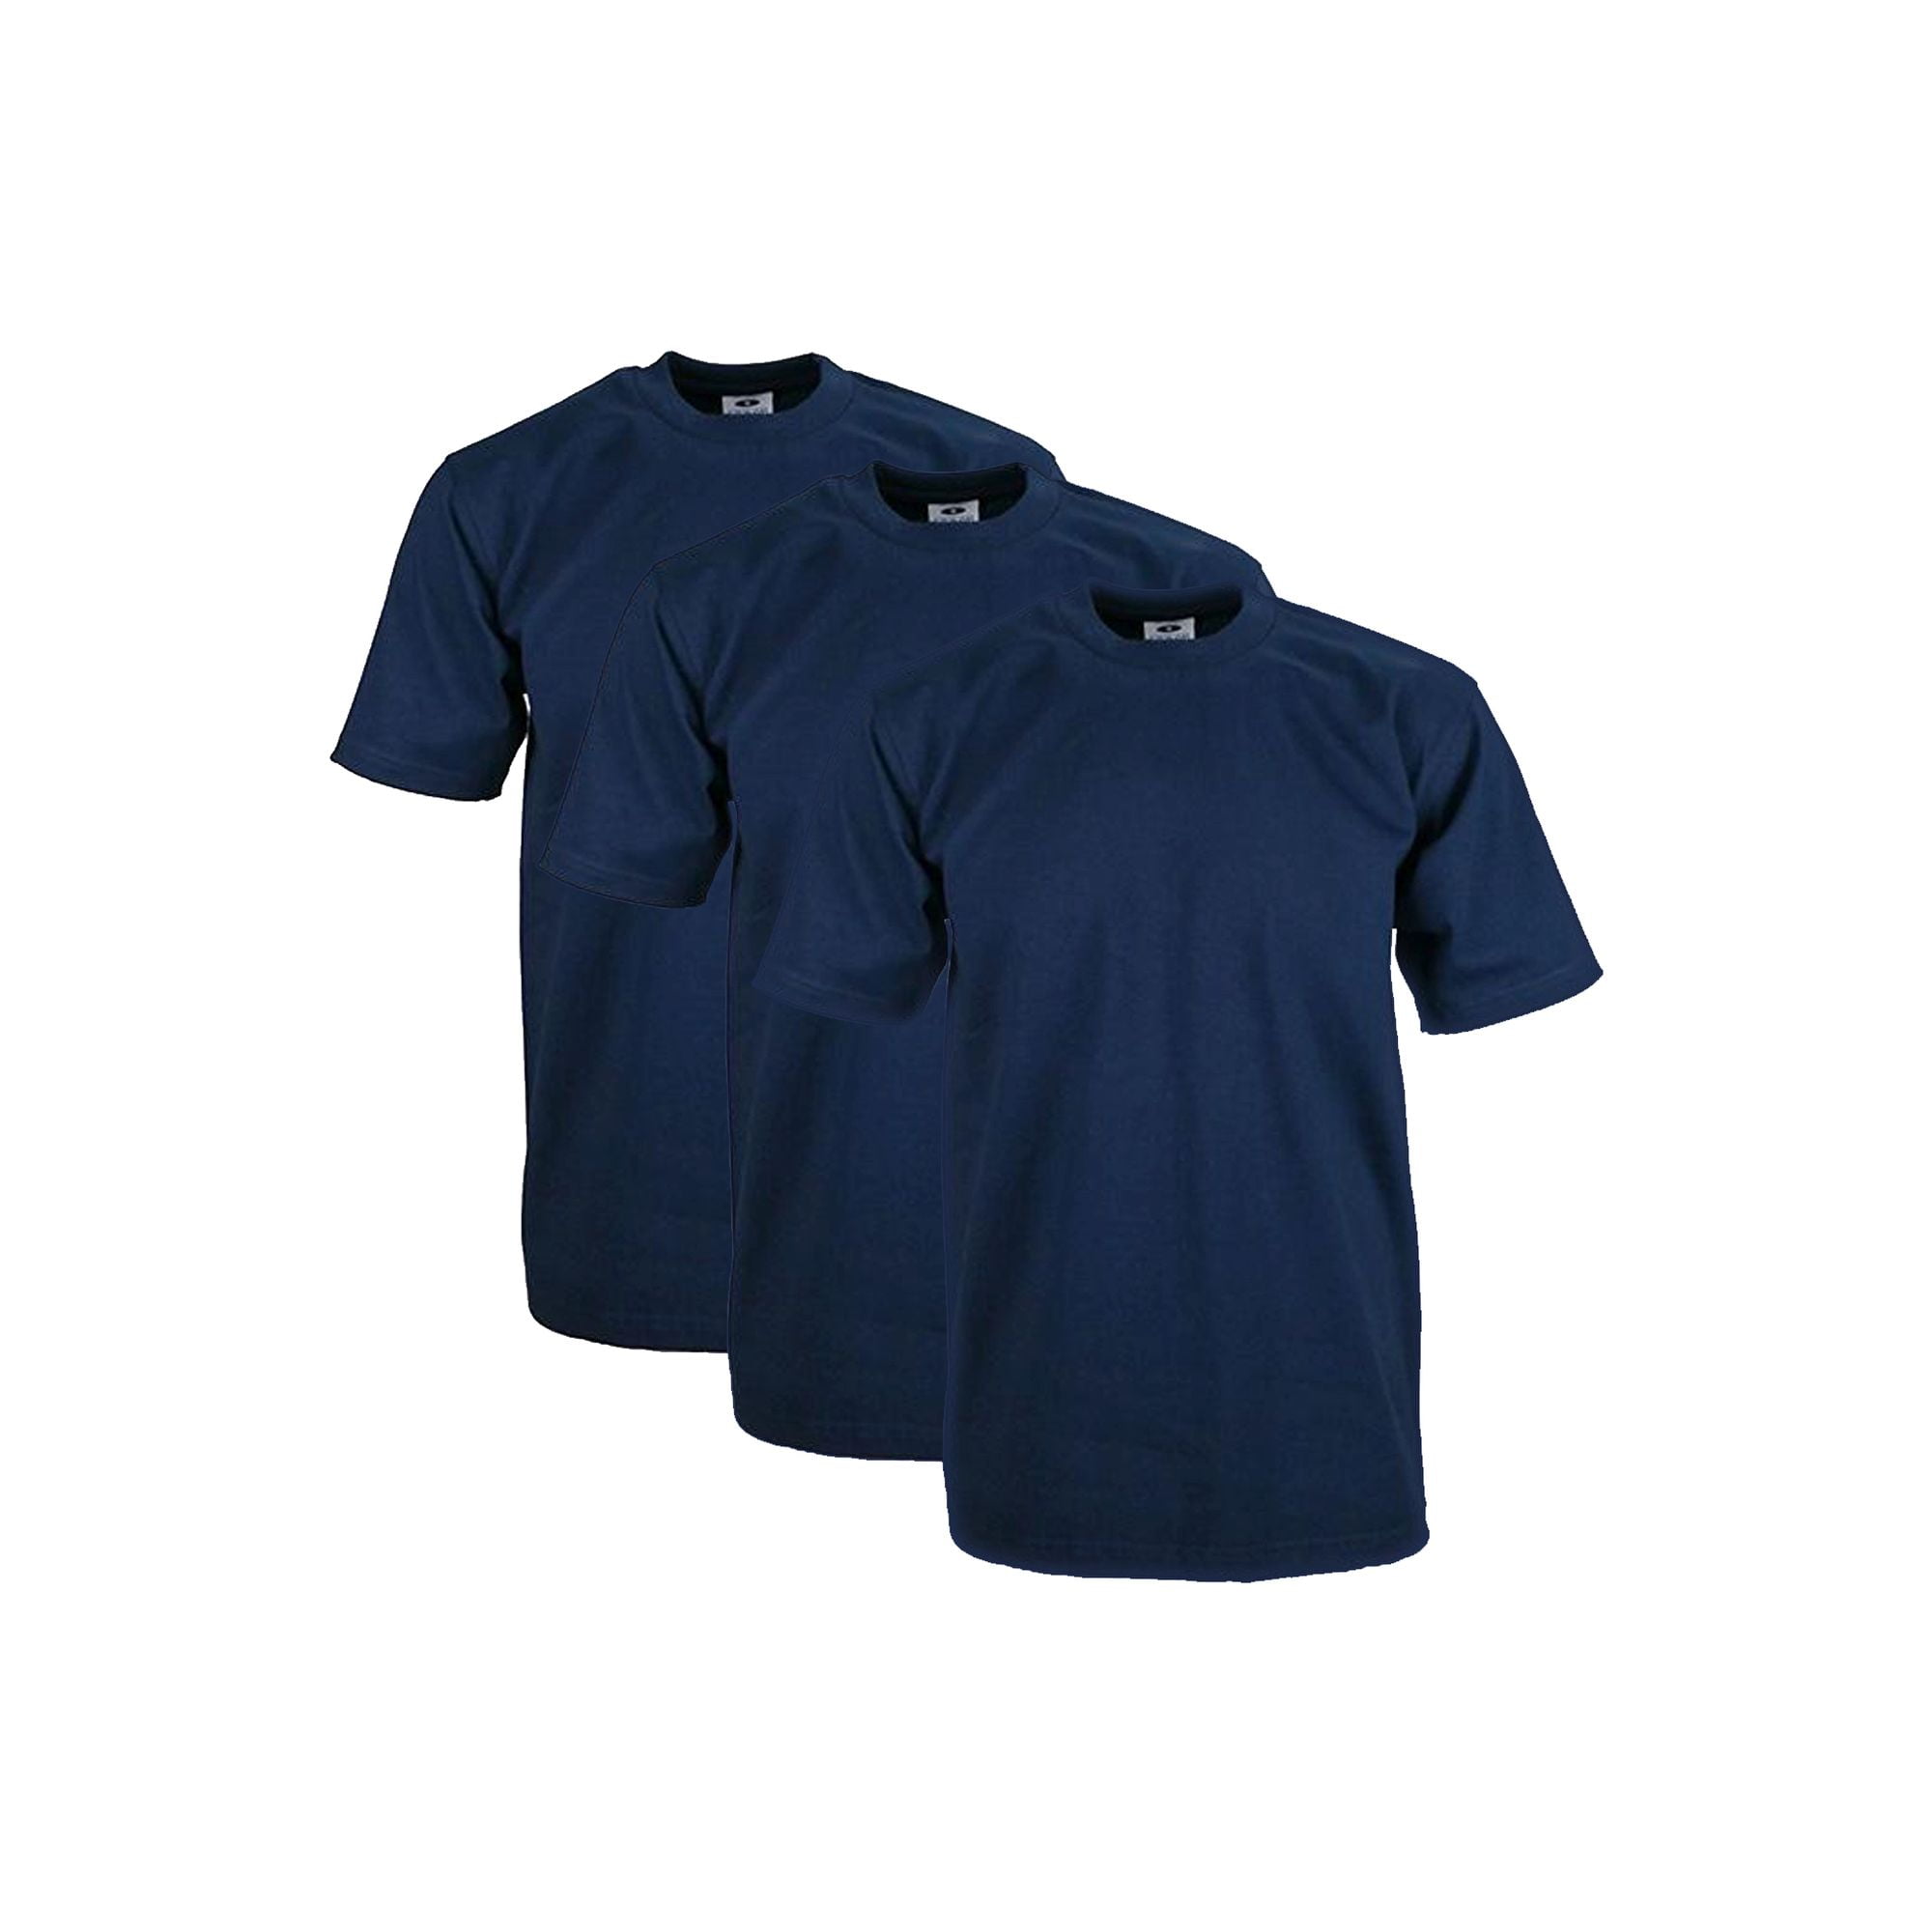 Access Mens Heavyweight Short Sleeve Cotton Crew Neck T-Shirt Pack of 3 AT35 